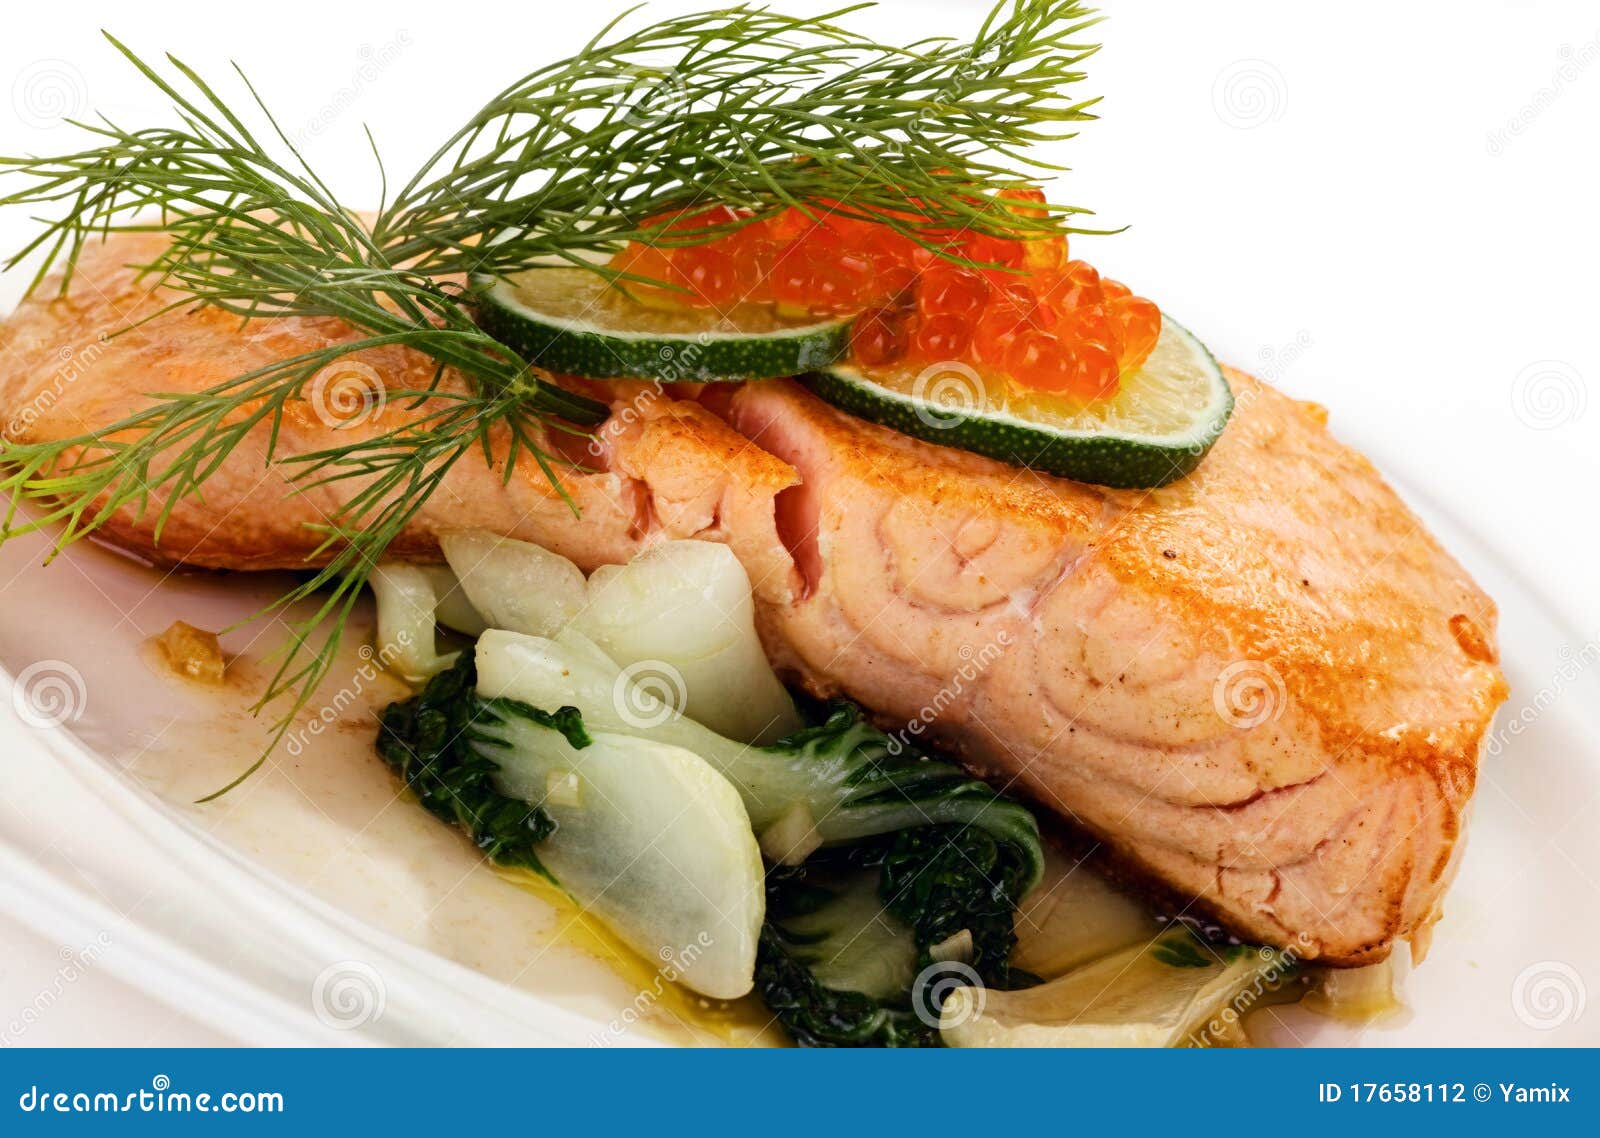 Broiled salmon stock photo. Image of dill, lemon, salmon - 17658112